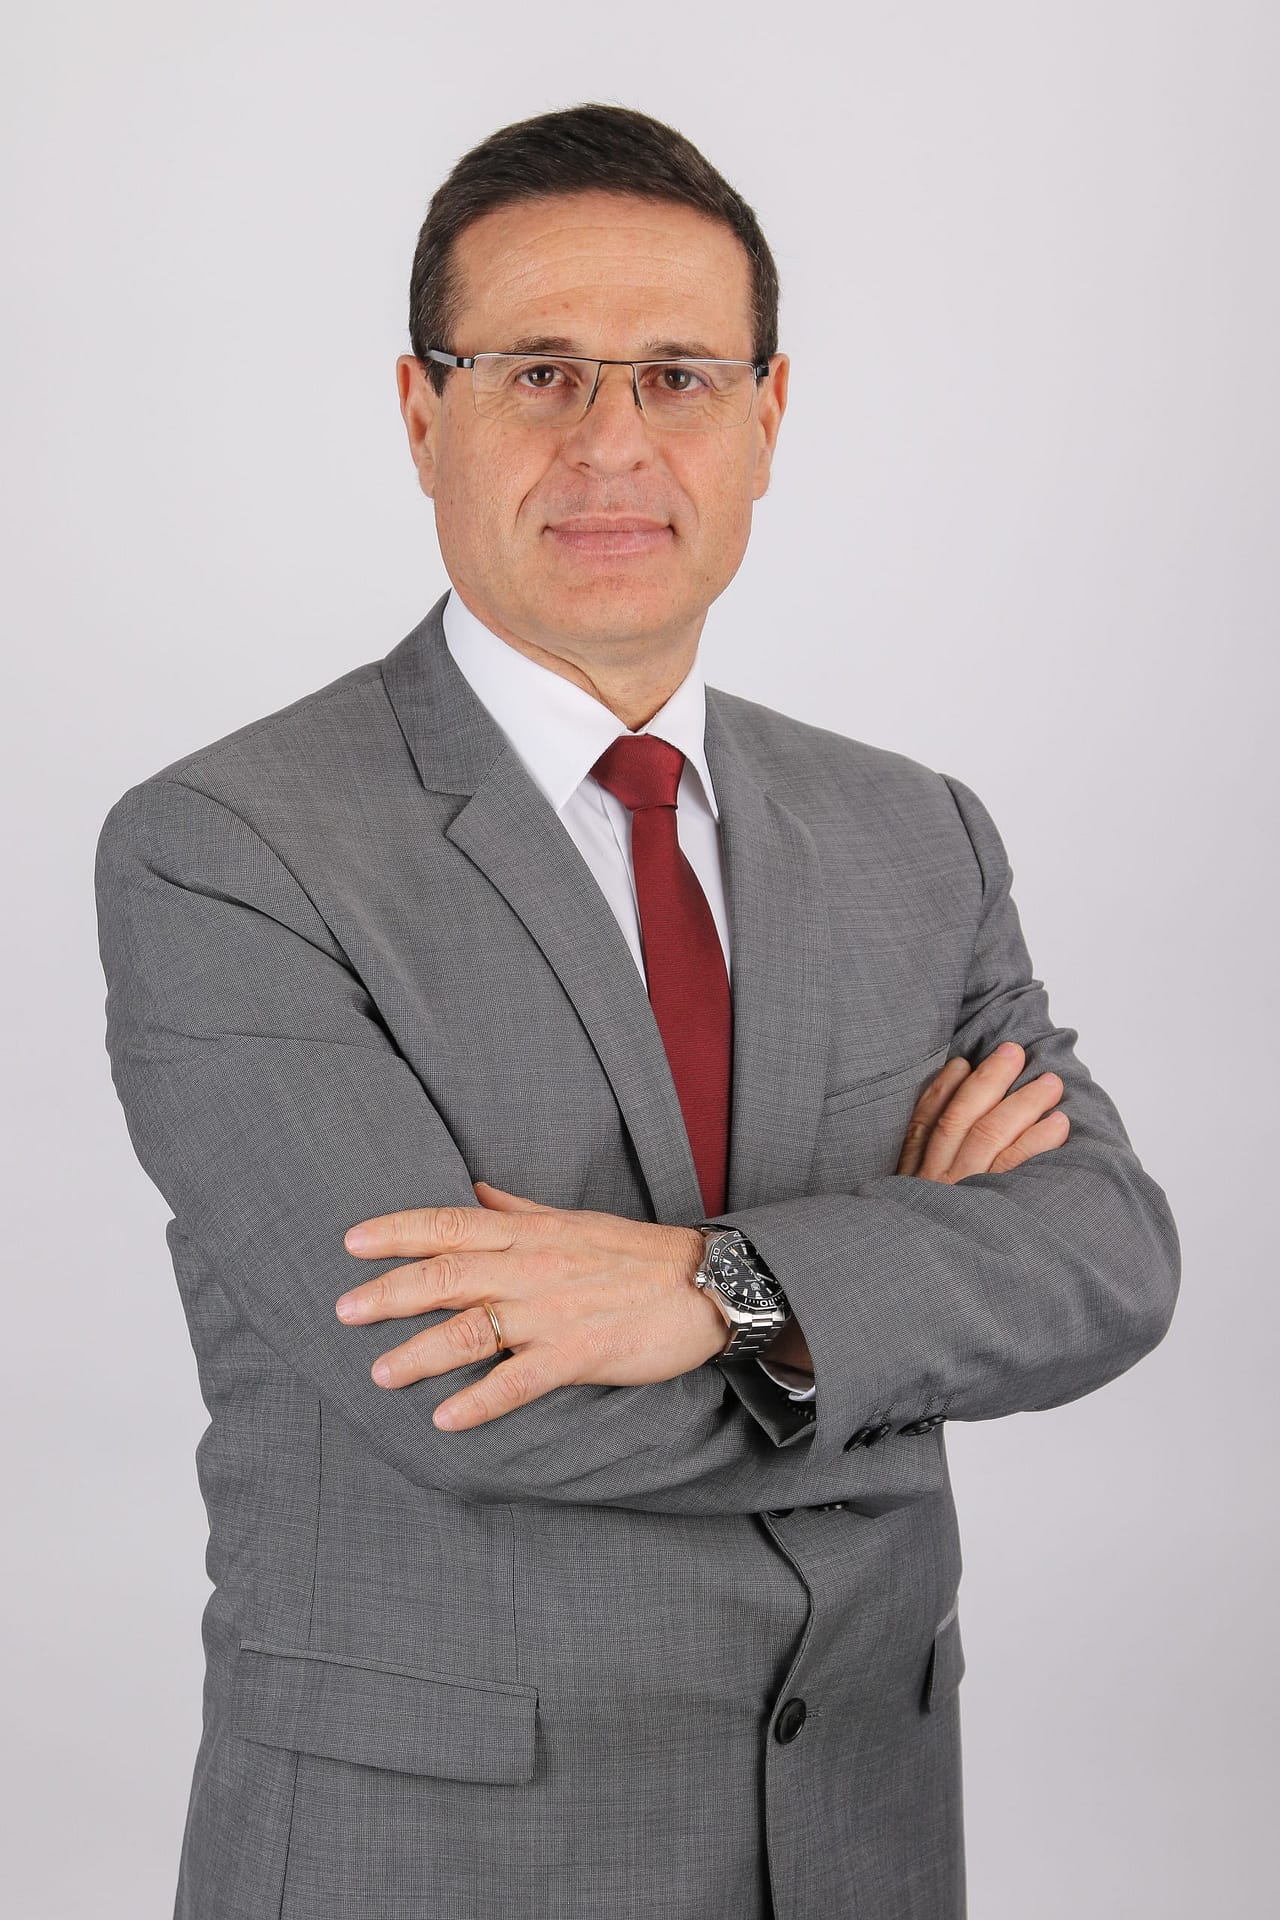 António Serrano